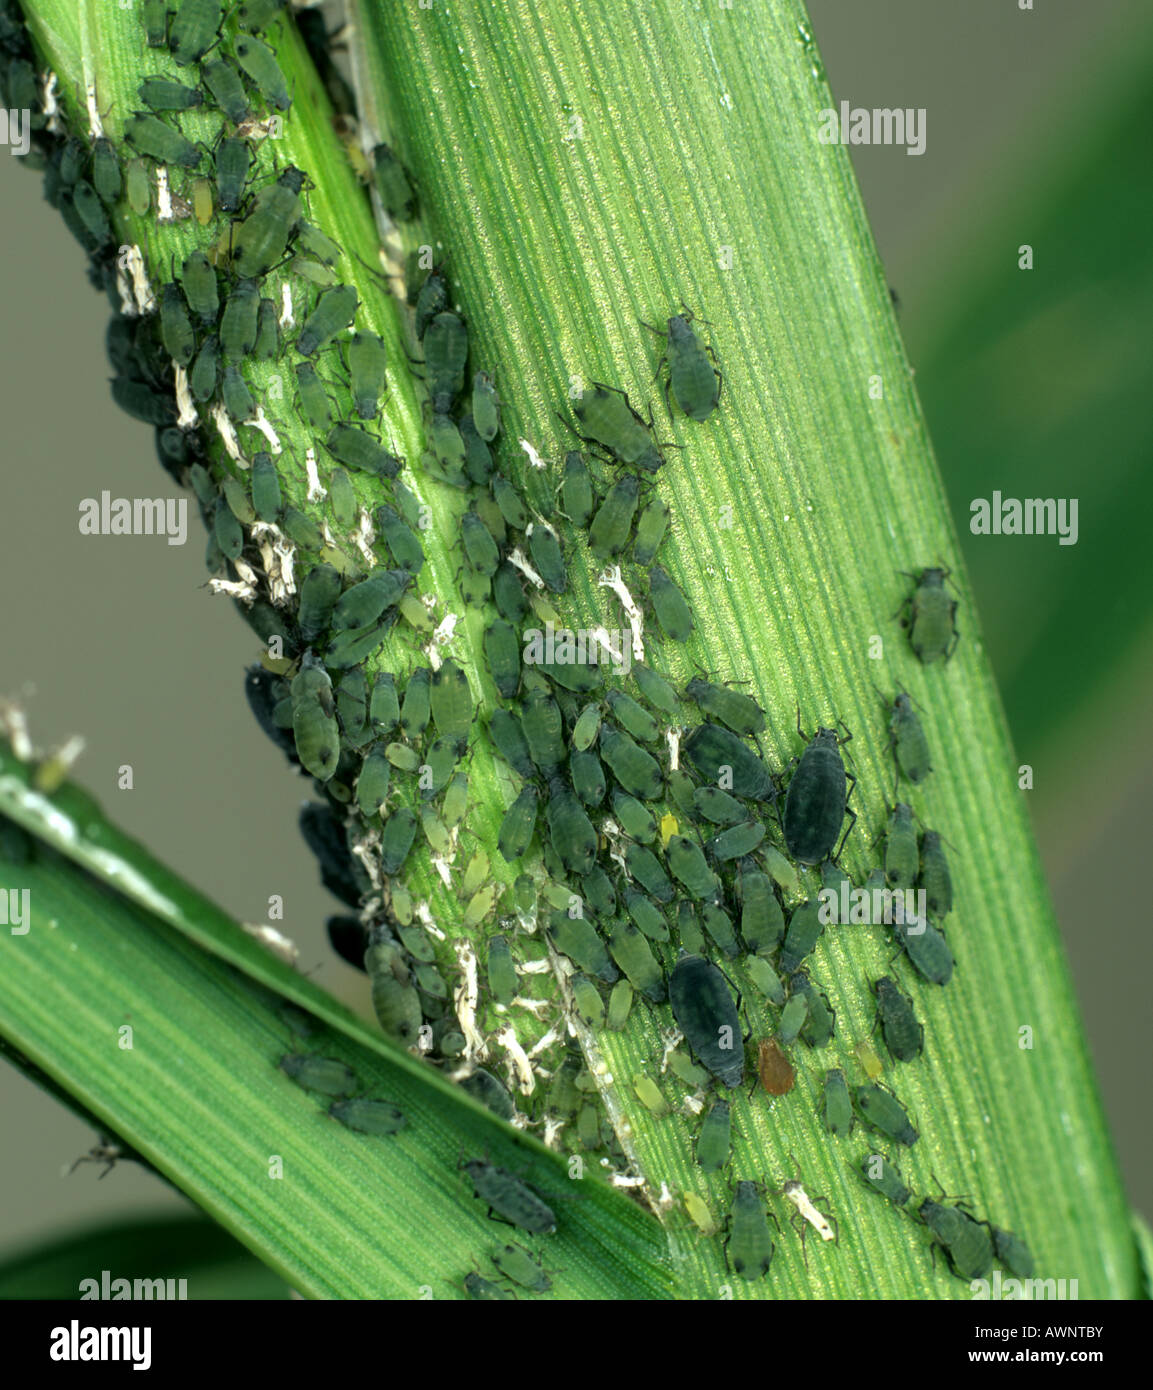 Cereal or corn leaf aphid Rhopalosiphum maidis infestation on cereal leaves Stock Photo